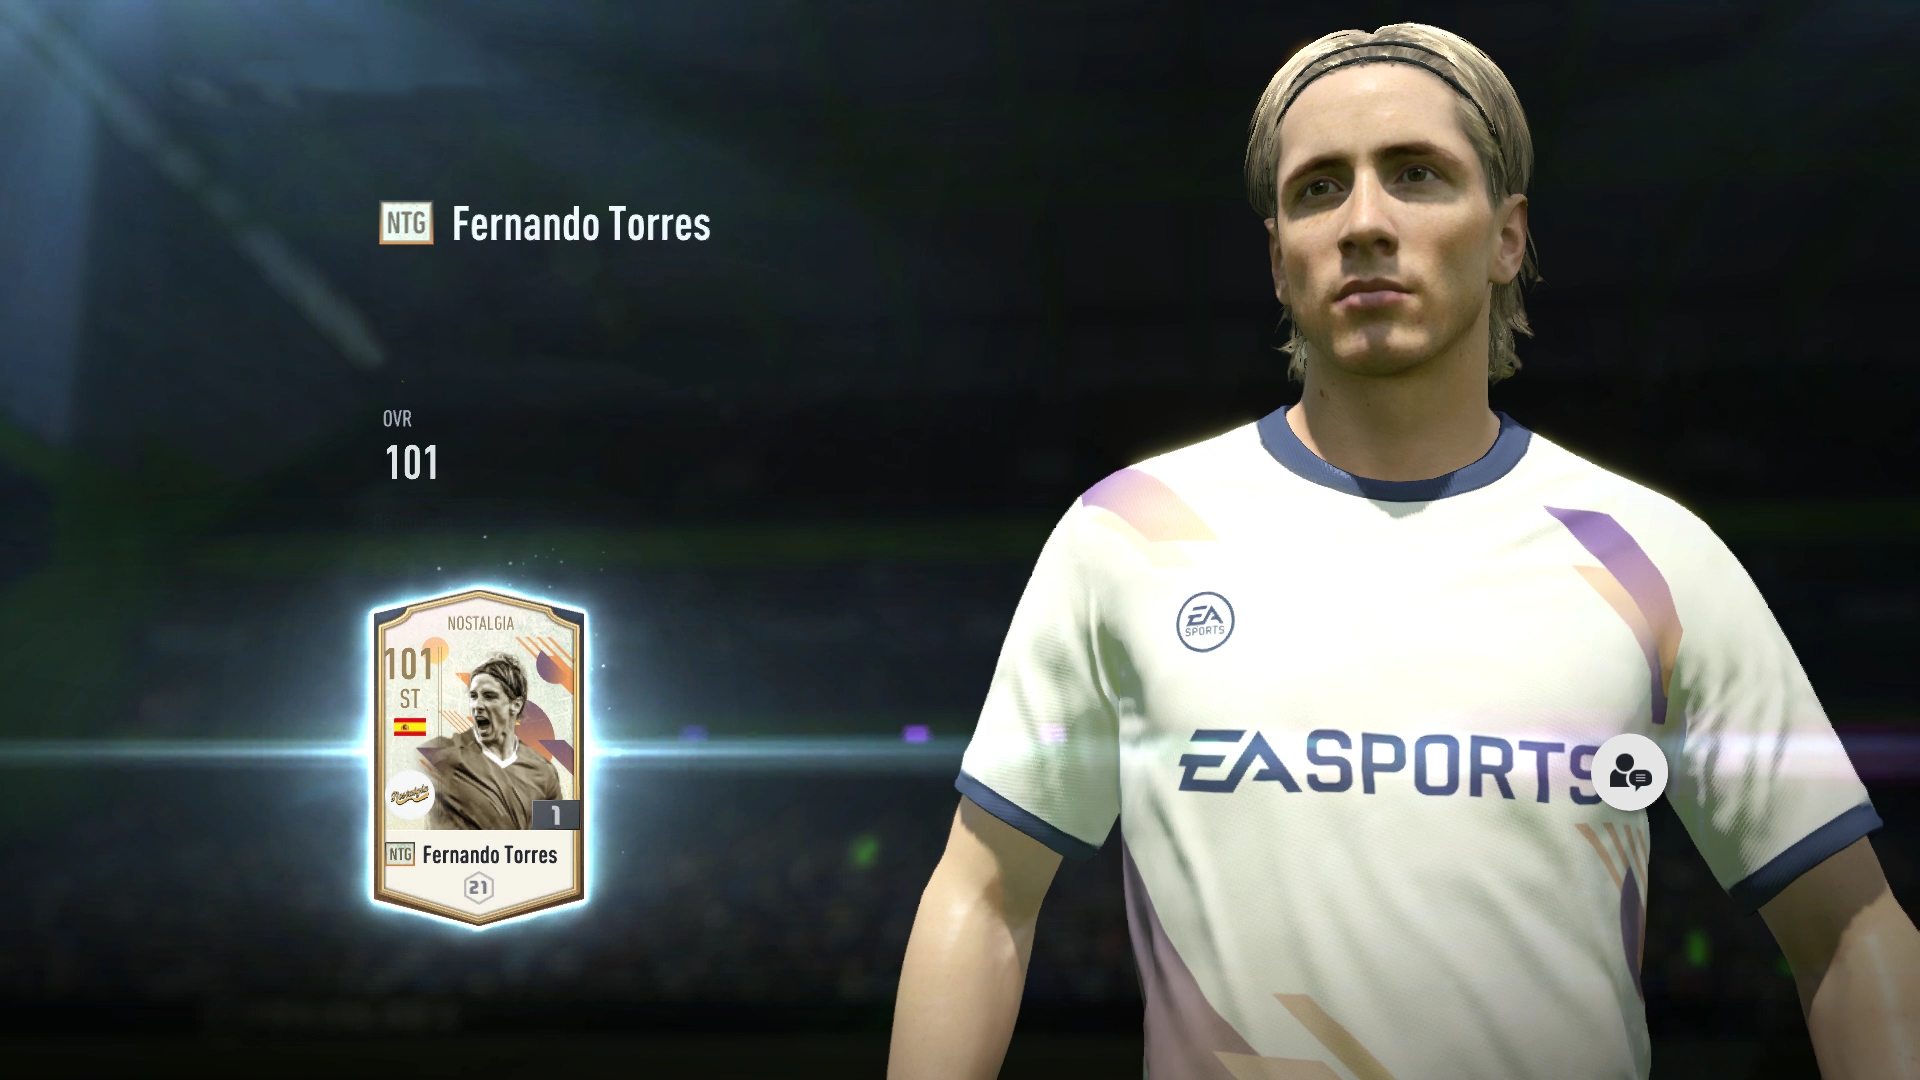 "Idol quốc dân" Fernando Torres tham gia FIFA Online 4